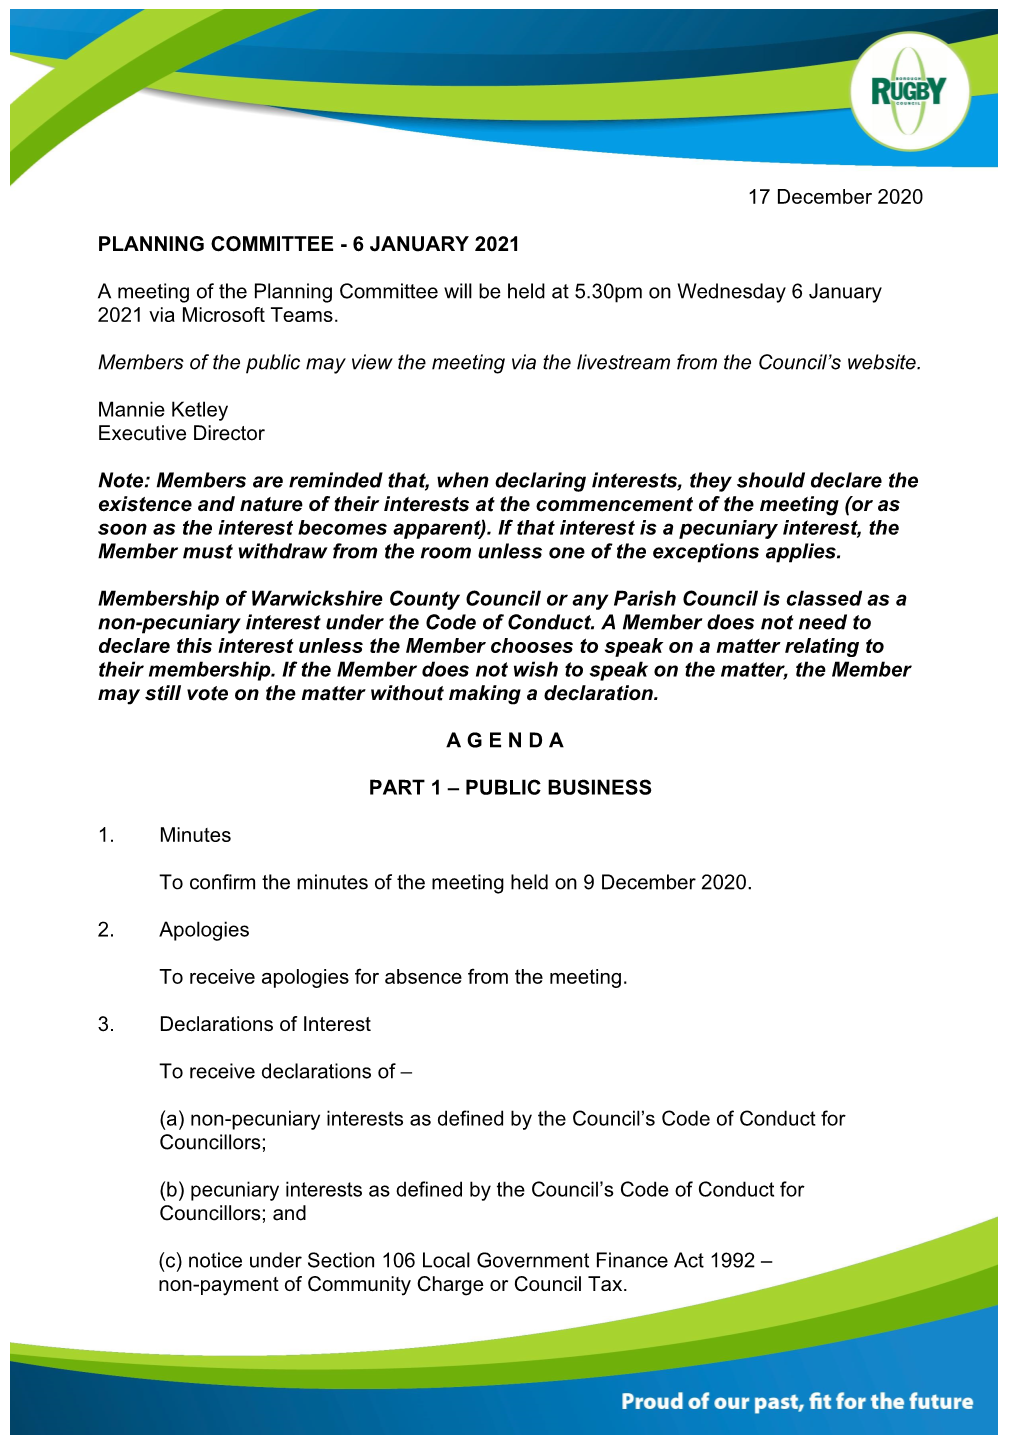 PUBLIC AGENDA Planning Committee 6 January 2021 PART 1